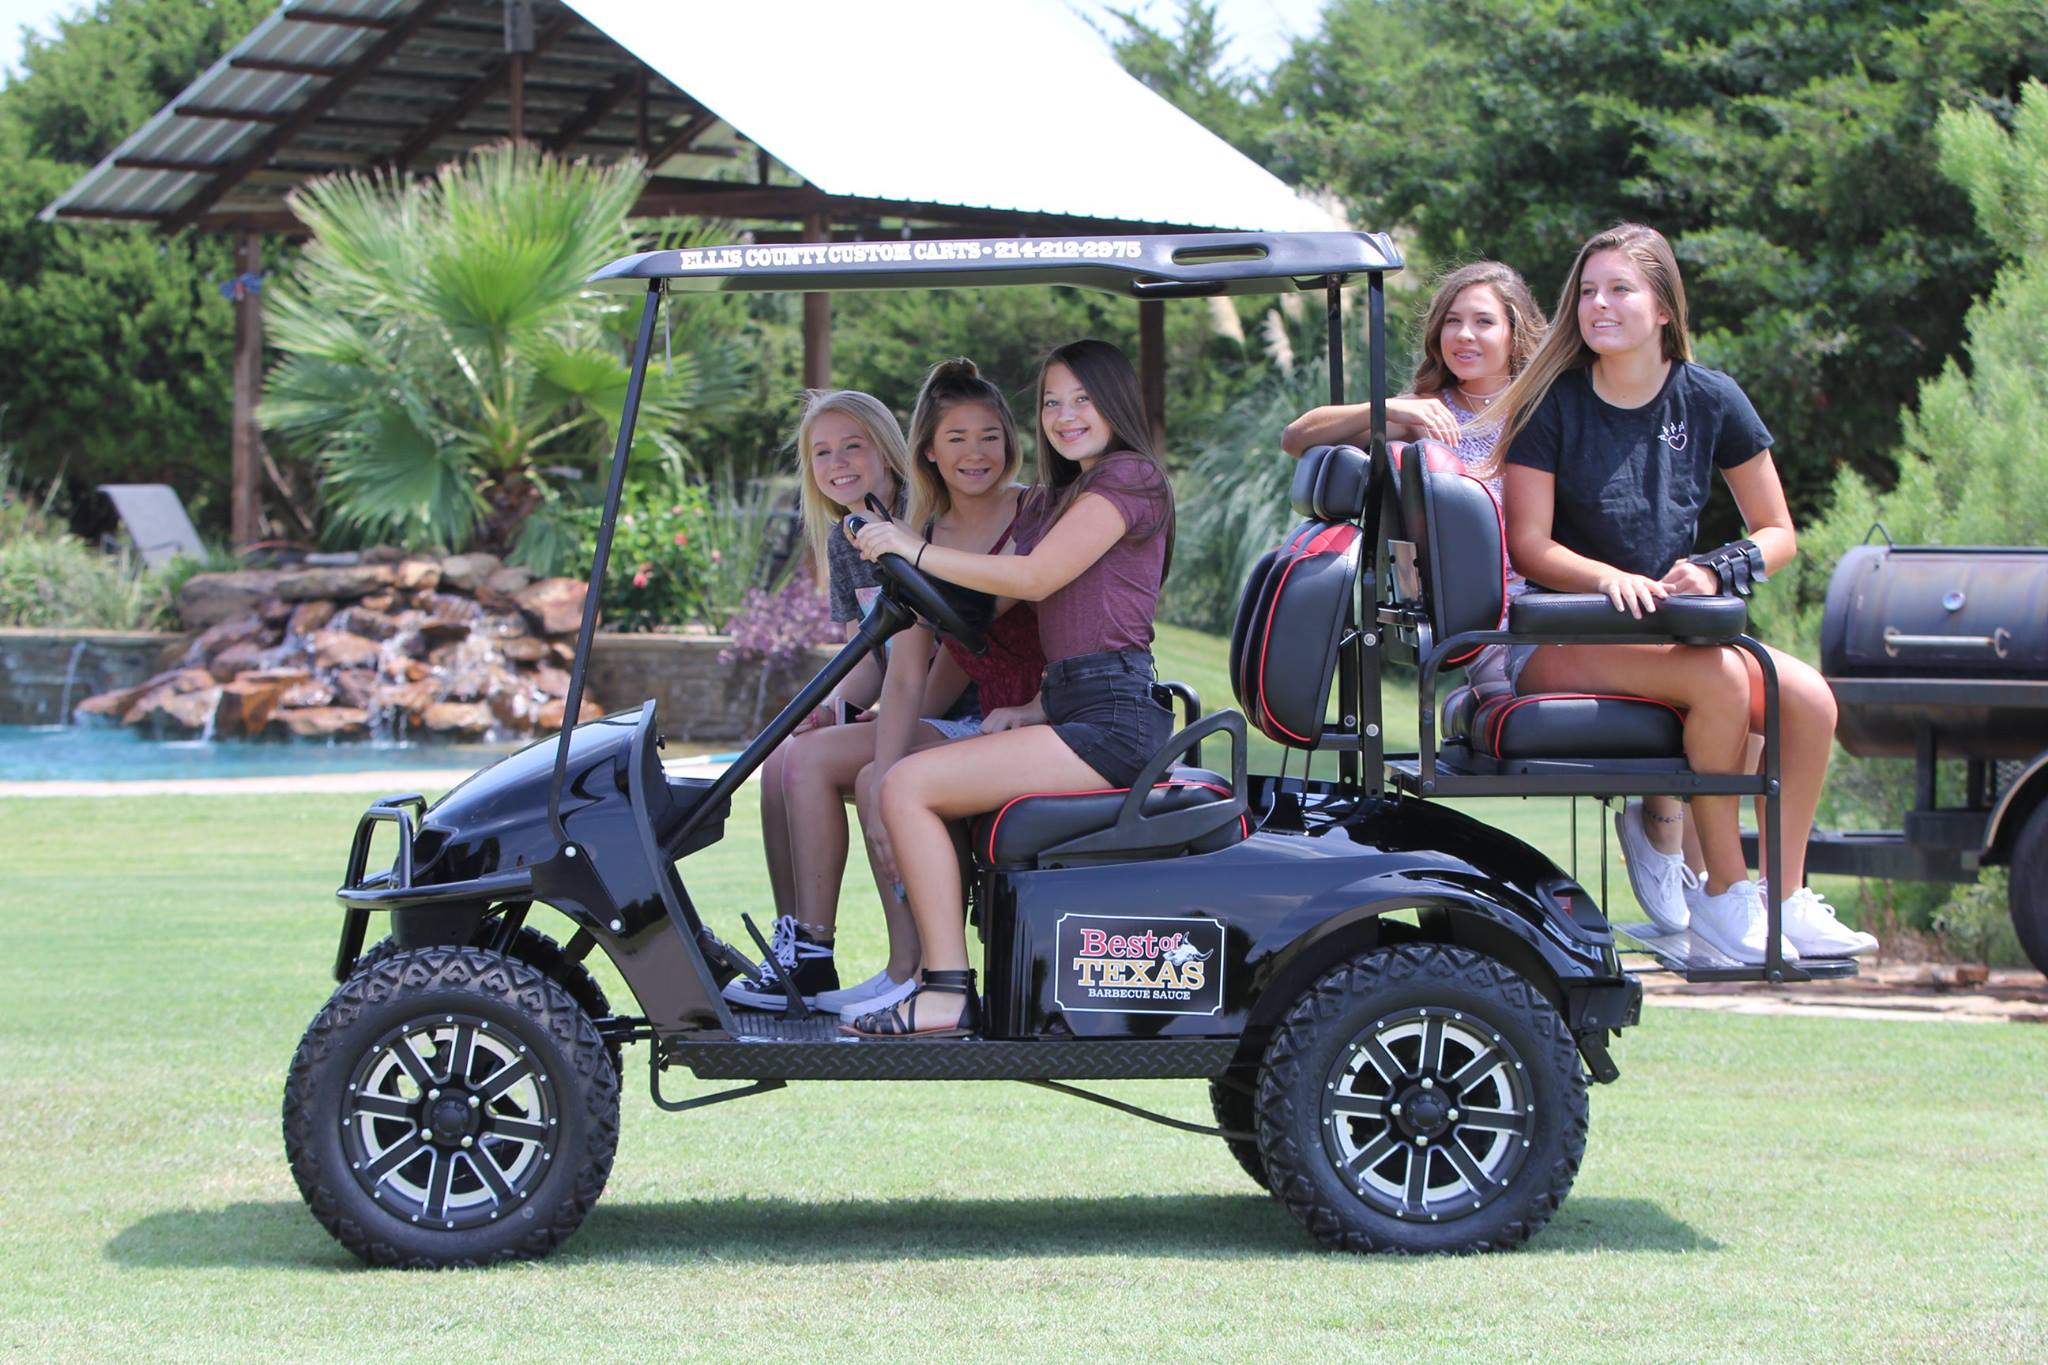 AUTHORIZED-EZGO-DEALER-Golf-Carts-Golf-Cart-Ellis-County-Custom-Carts-utility-golf-car-utility-cart-terrain-golf-cart-for-sale-golf-carts-for-sale-Yamaha-Toro-golf-cart-batteries